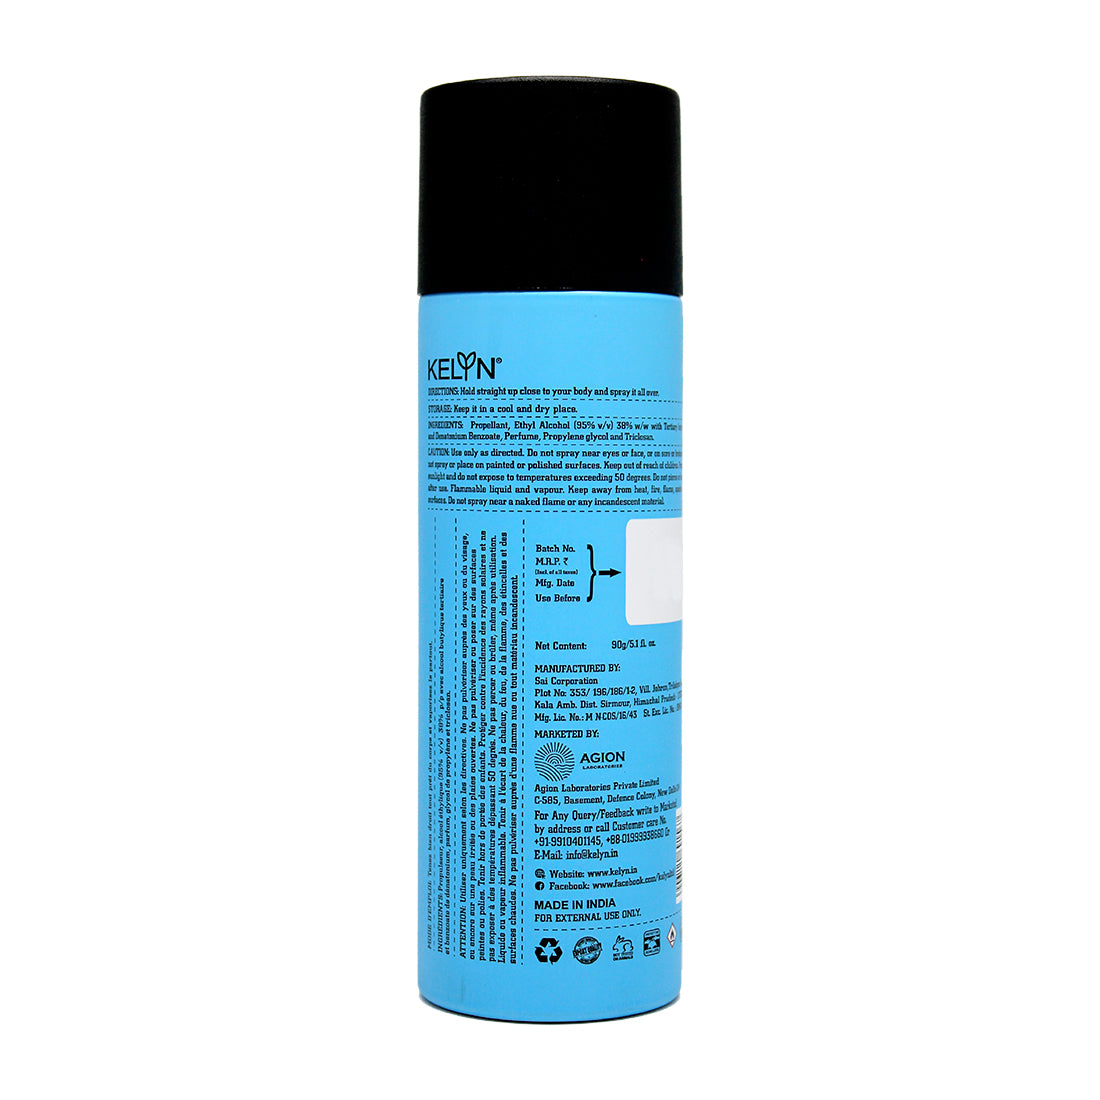 Sports Rush Deodorant Body Spray, 150 ml